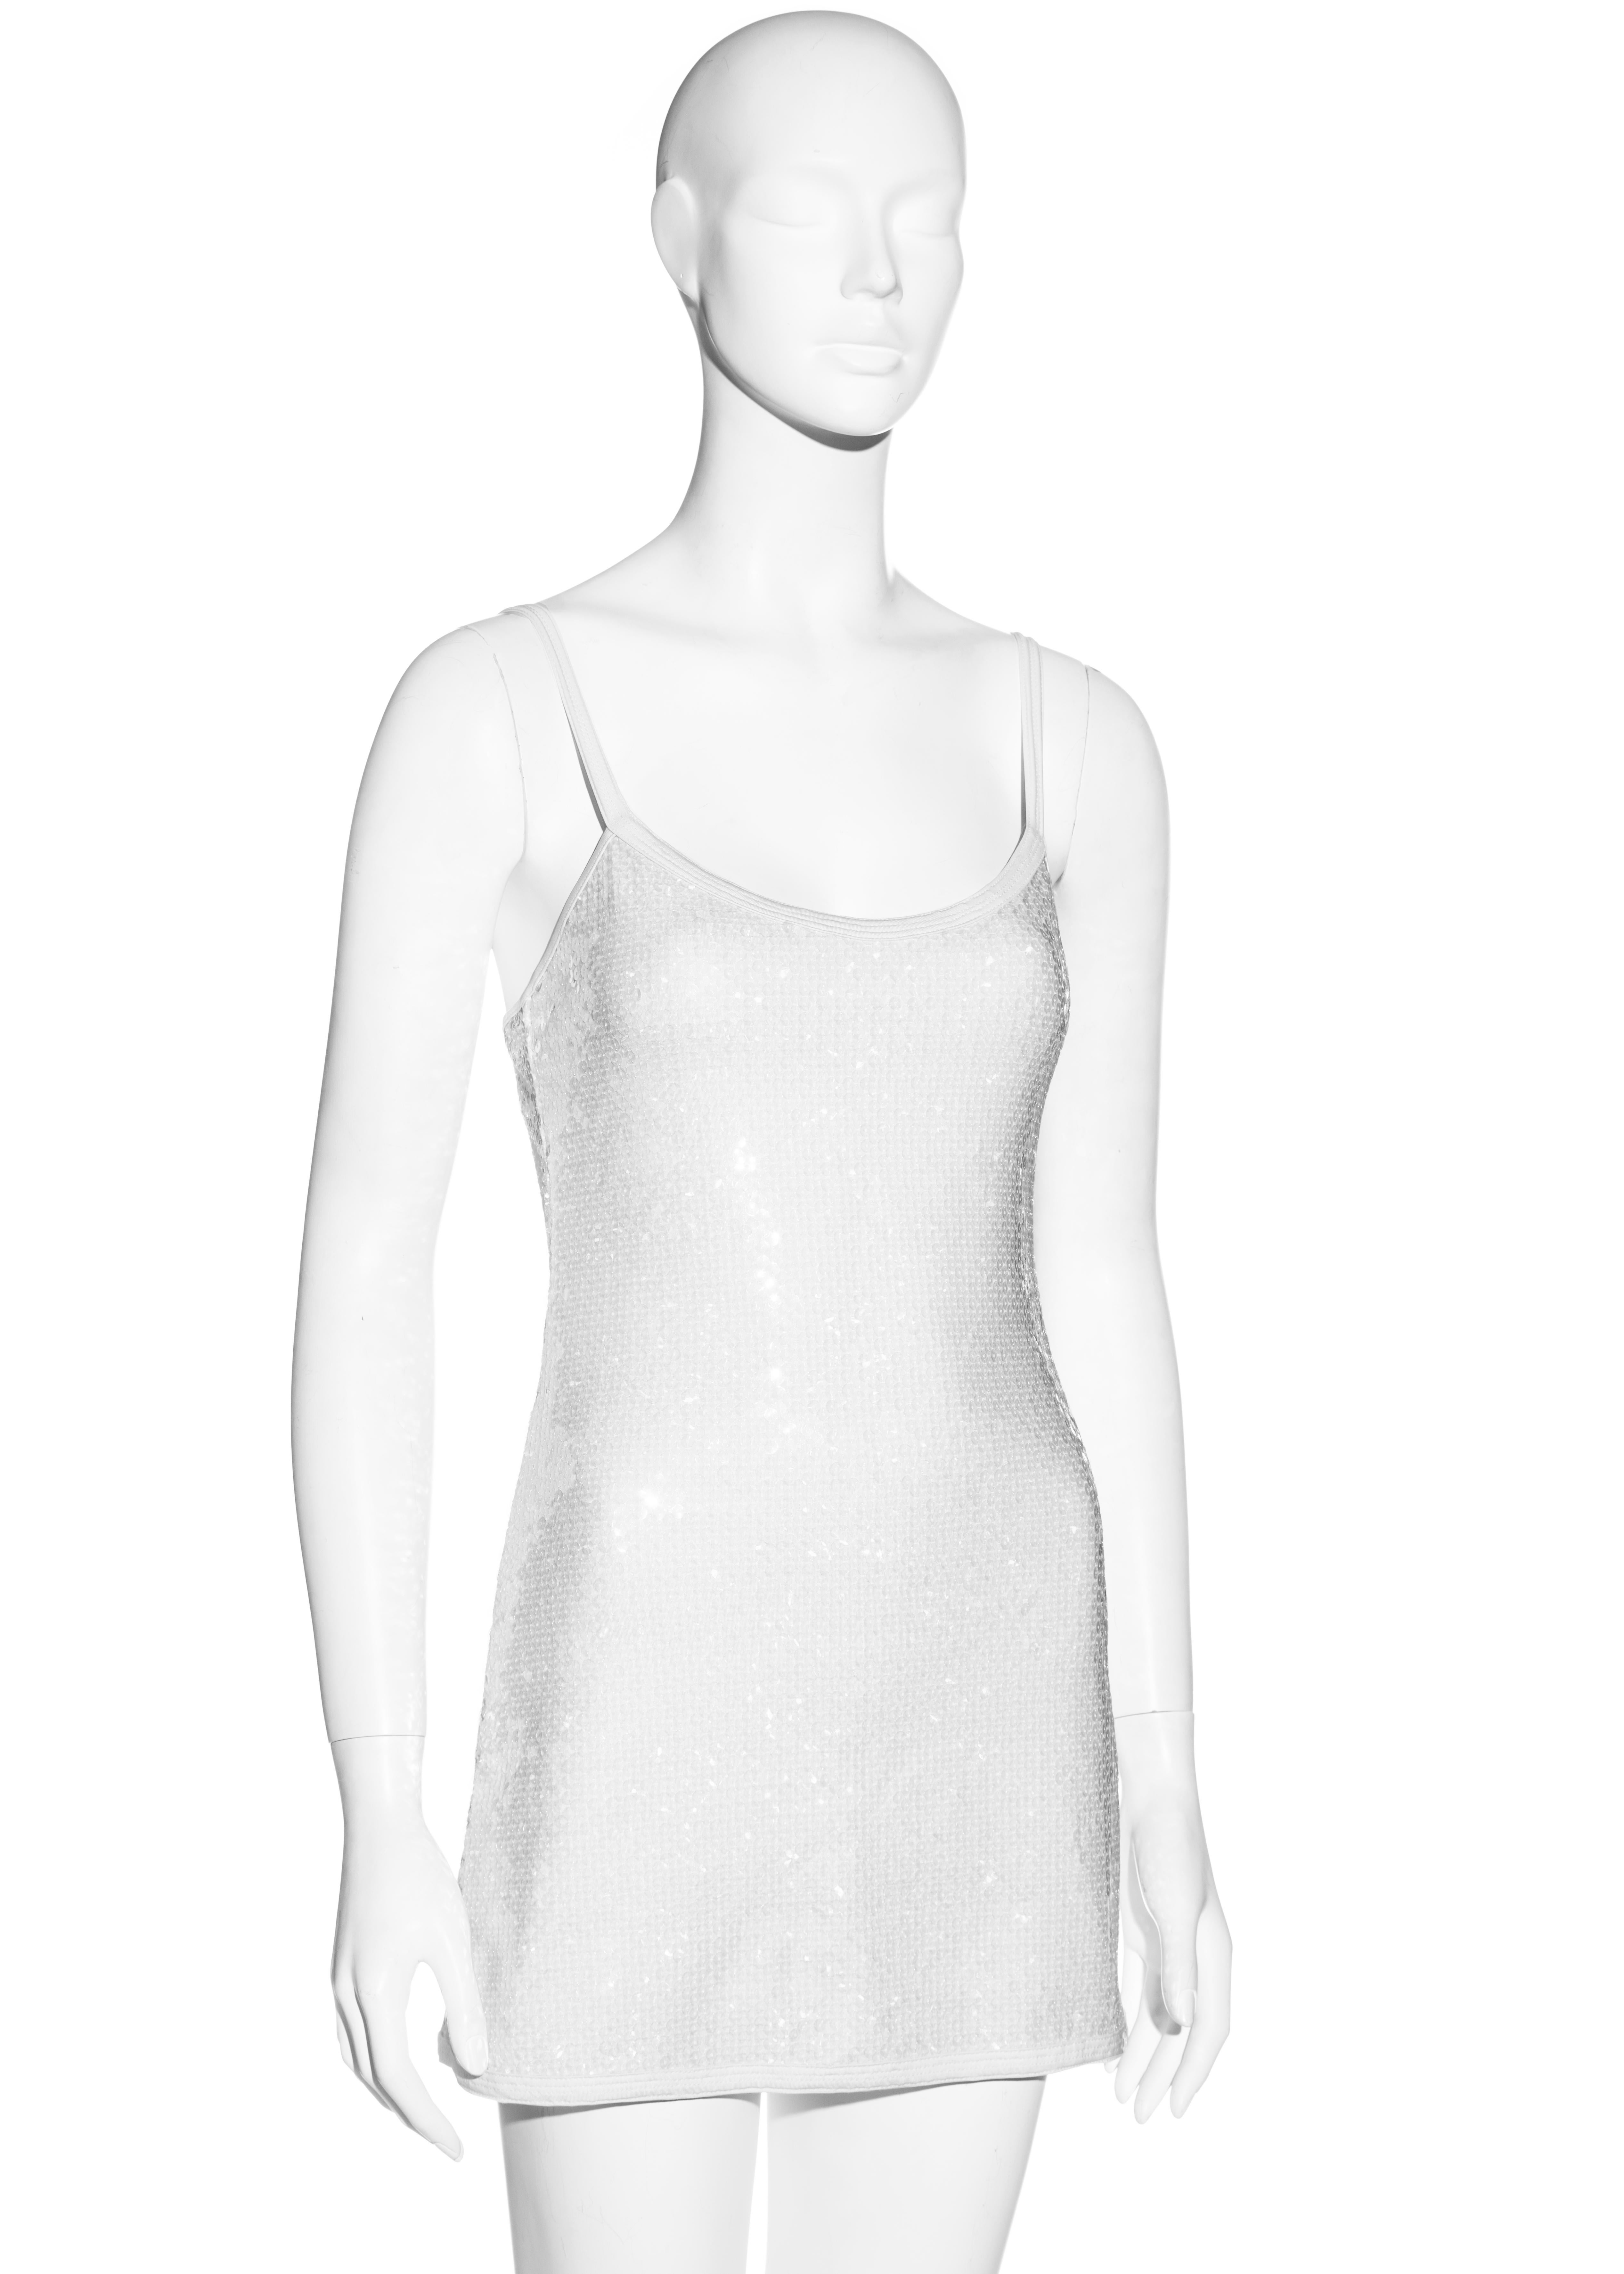 ▪ Chanel white sequin mini dress
▪ Designed by Karl Lagerfeld 
▪ Clear iridescent sequins 
▪ Scoop neckline 
▪ Spaghetti straps 
▪ FR 38 - UK 10 - US 6
▪ Spring-Summer 2005